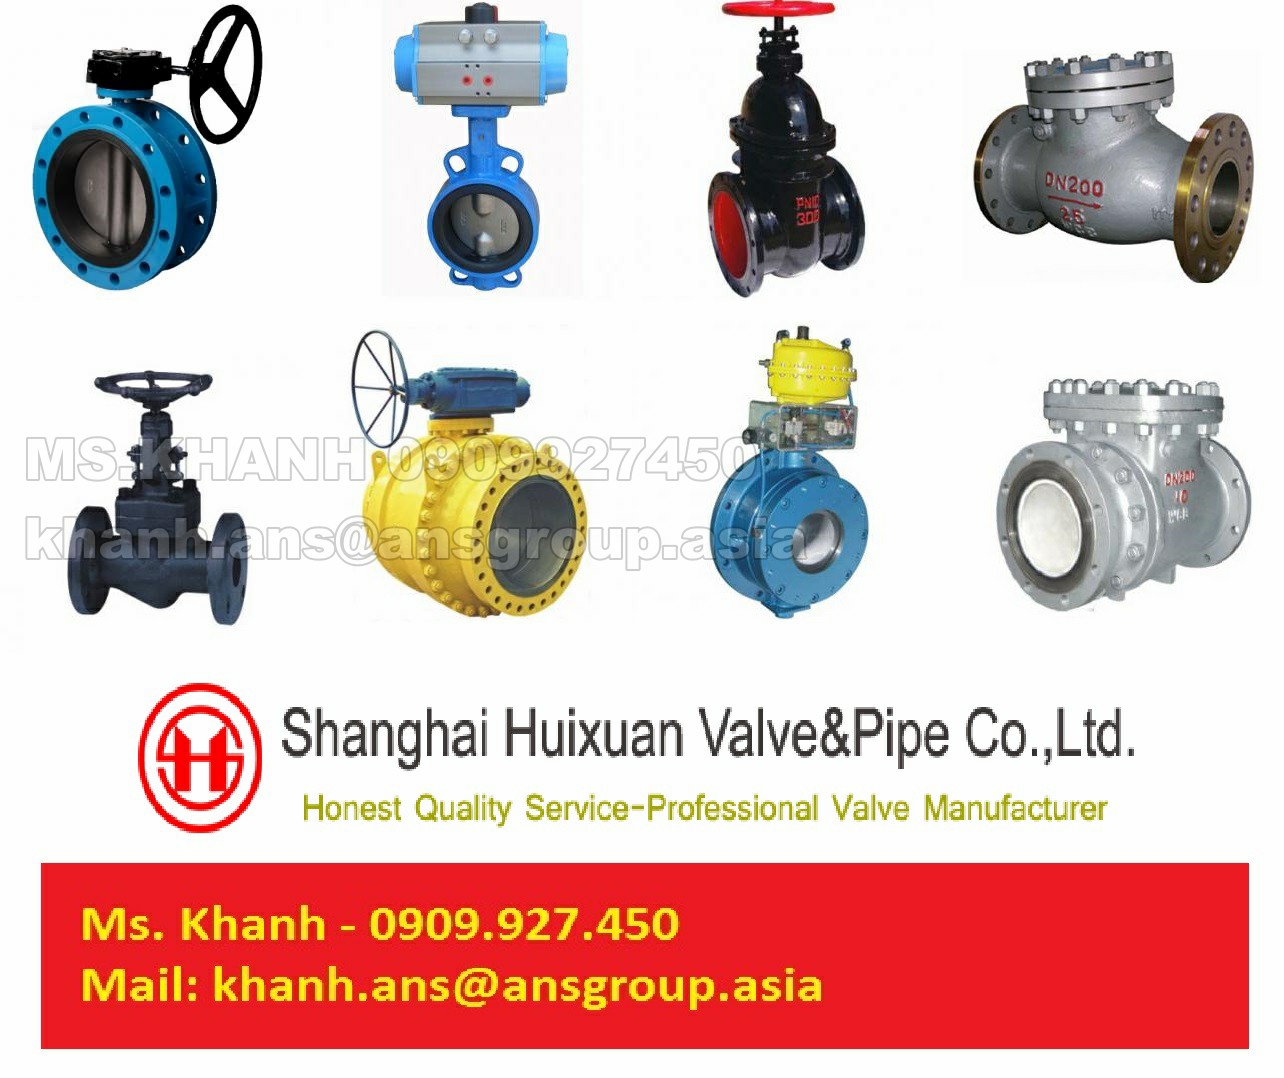 van-hc41x-10-flange-silent-check-valve-shanghai-huixuan-valve-pipe-vietnam.png